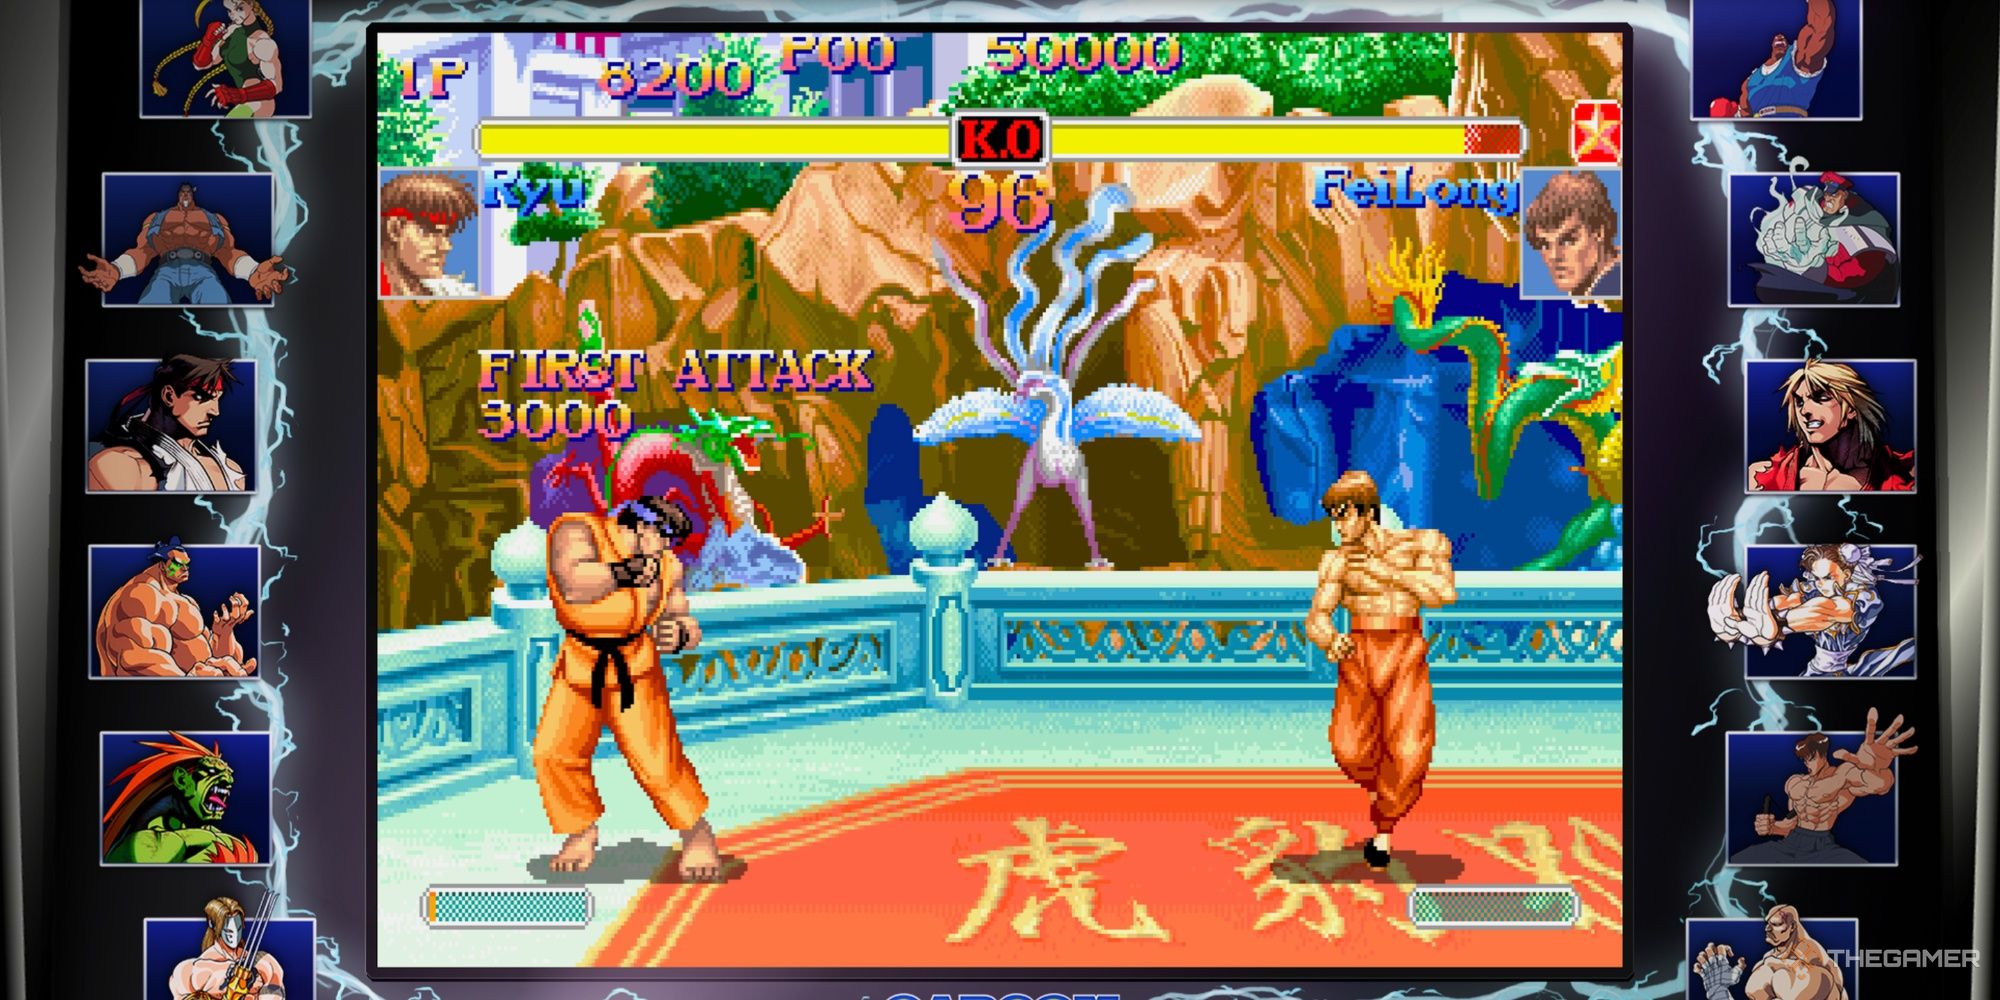 Ryu fighting against Fei Long in Super Street Fighter 2 Turbo